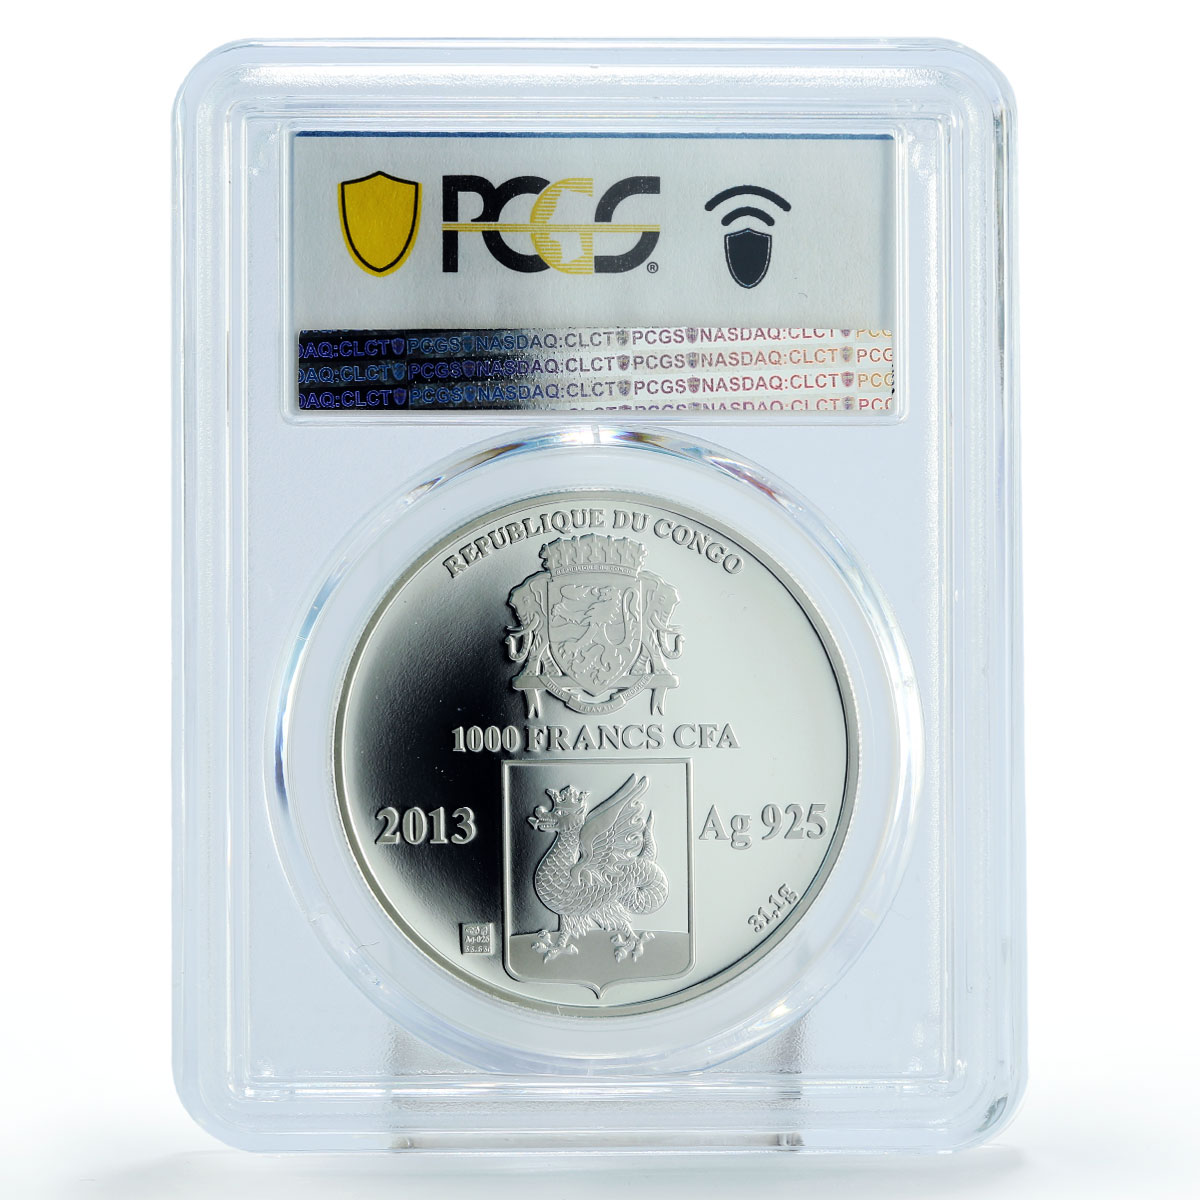 Congo 1000 francs Monuments Kazan City Kremlin PR69 PCGS silver coin 2013